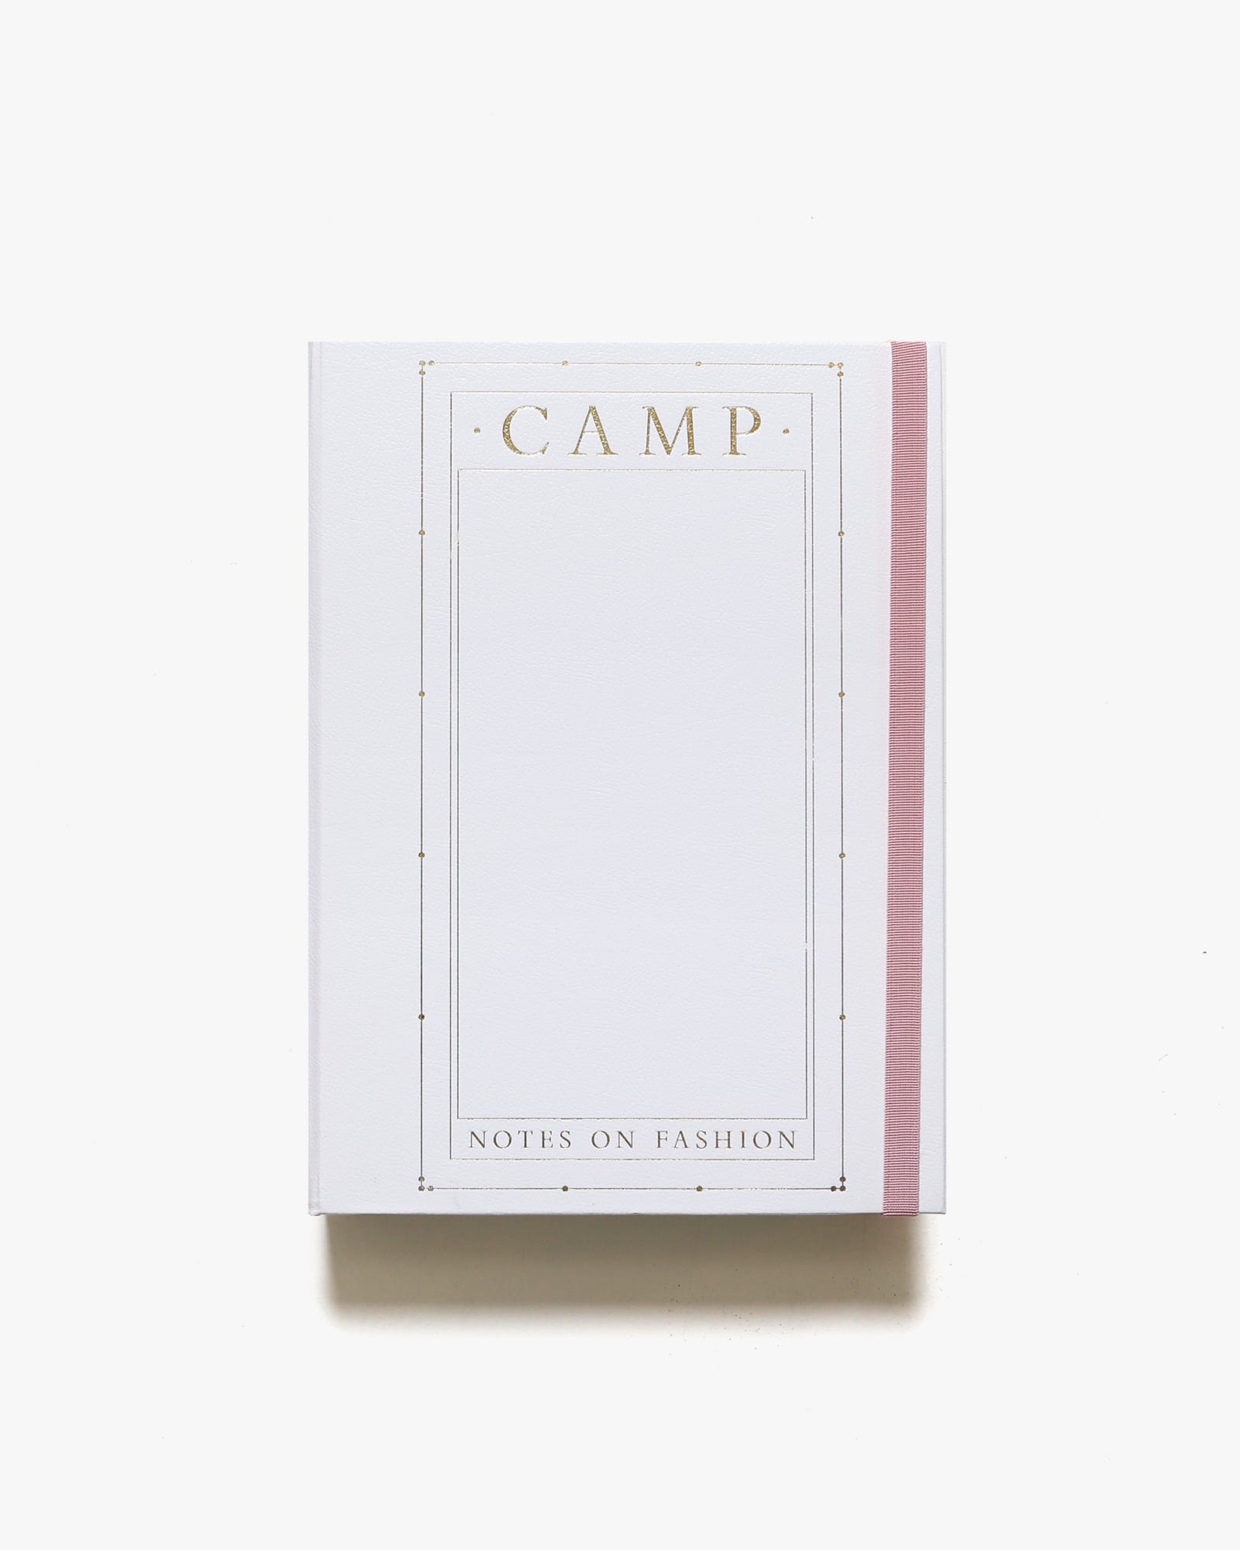 CAMP: Notes on Fashion | Metropolitan Museum of Art